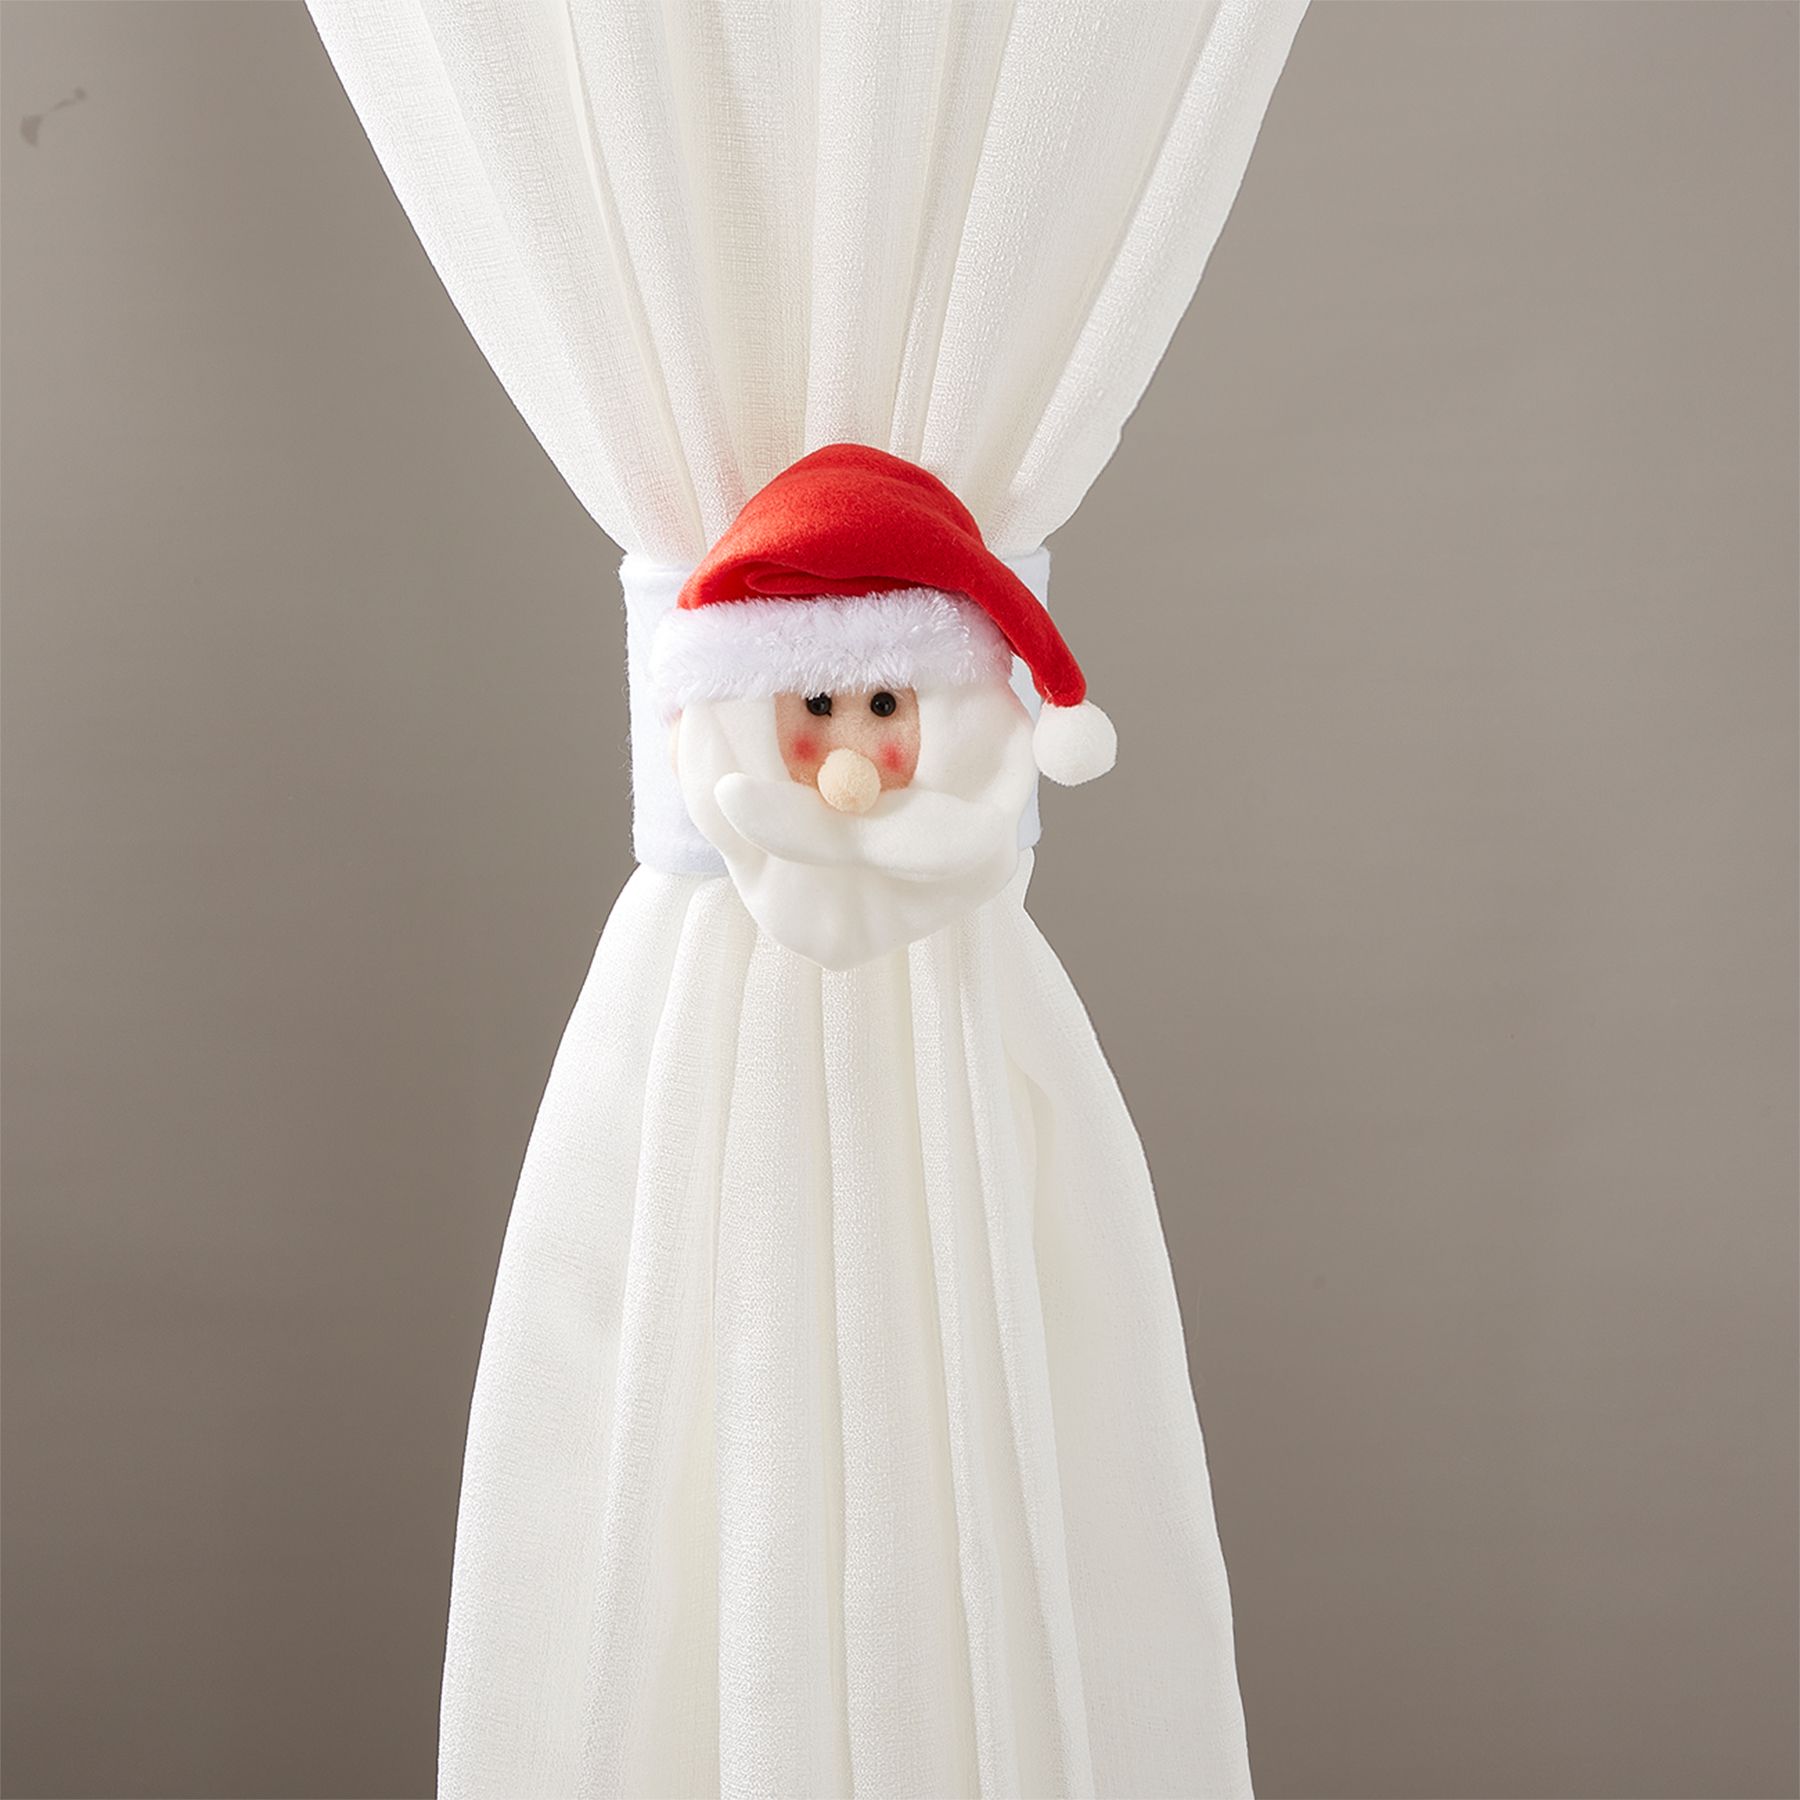 Cartoon Christmas Ornament Curtain Tieback With Fine Workmanship